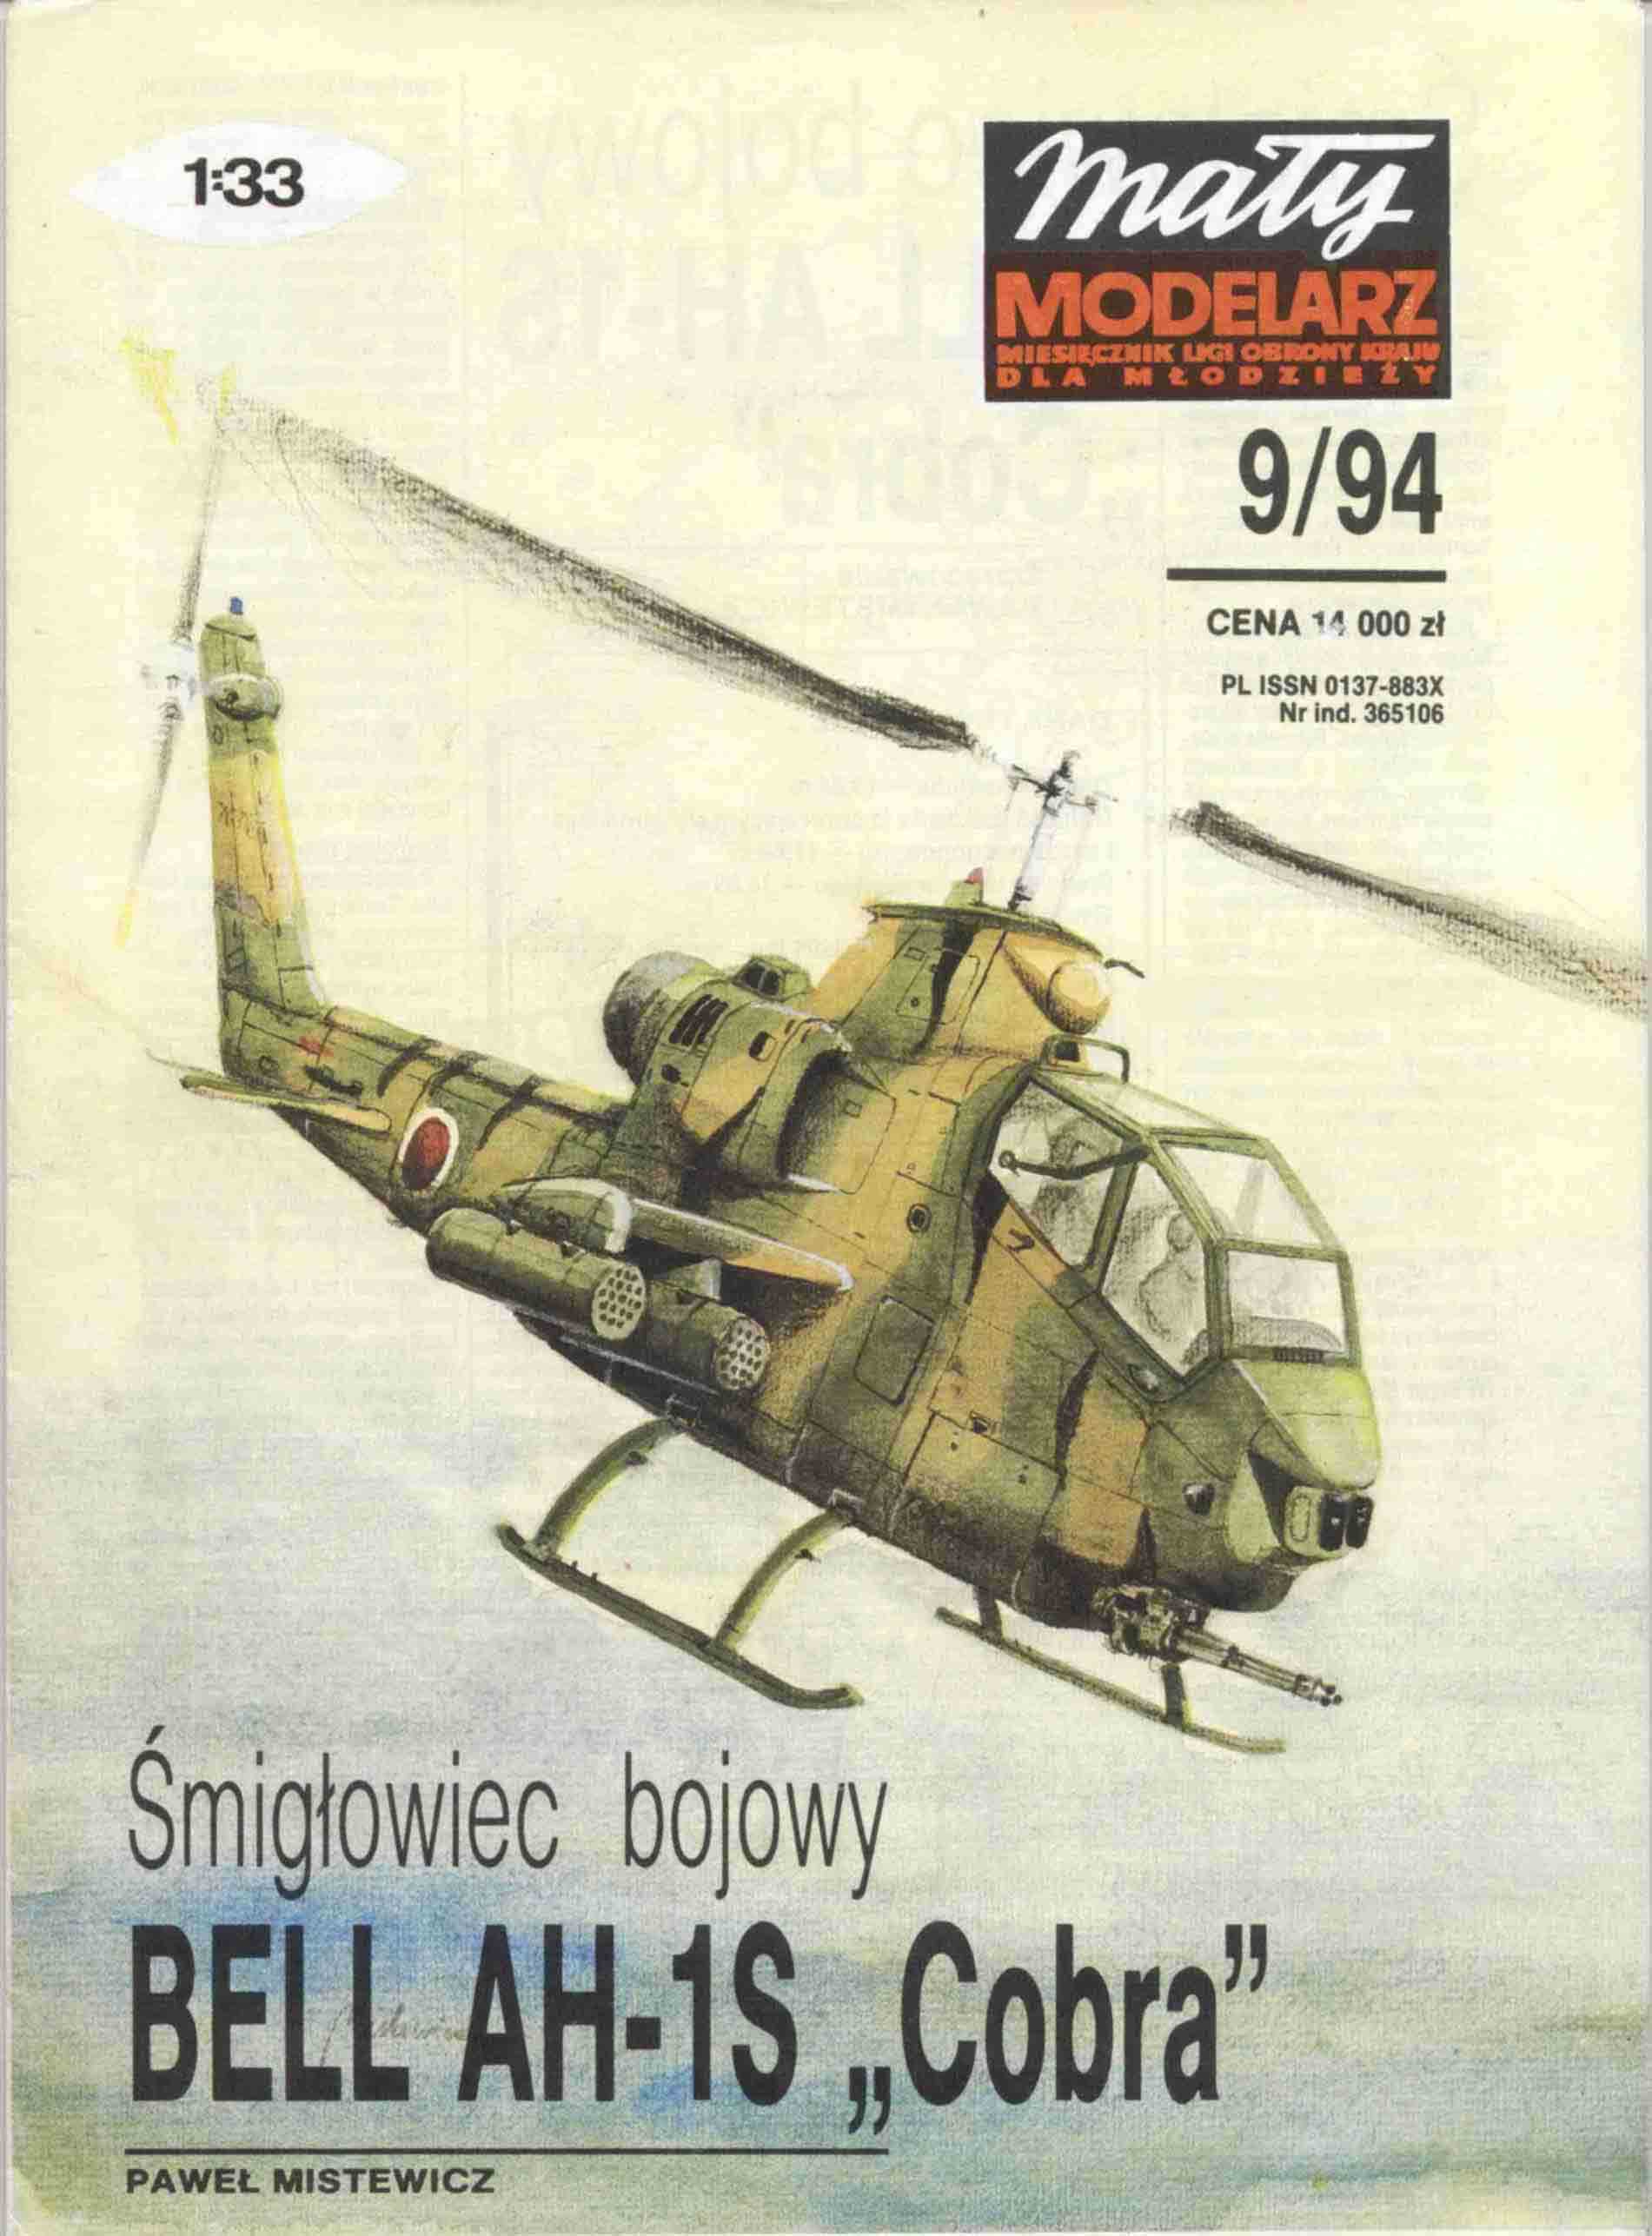 "Maly Modelarz" 9, 1994